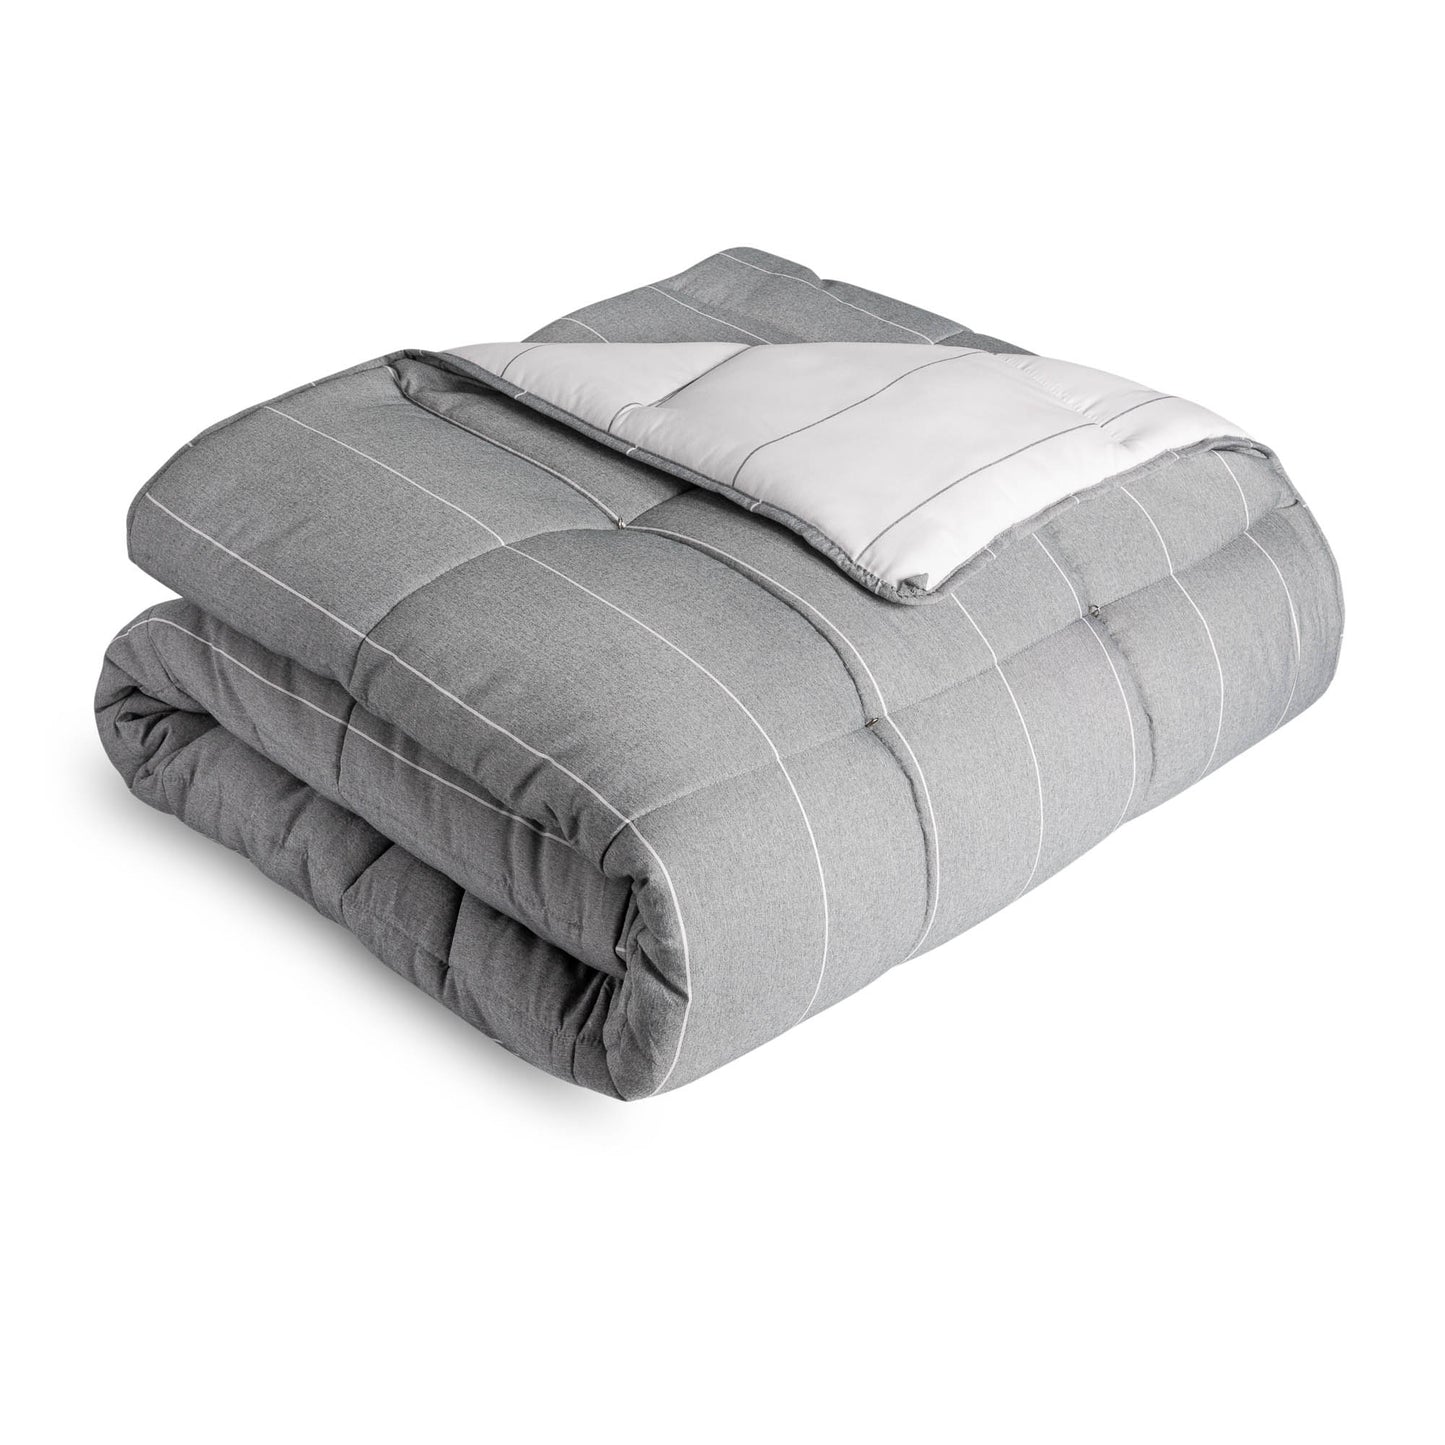 Woven Down Alternative Chambray Comforter Set